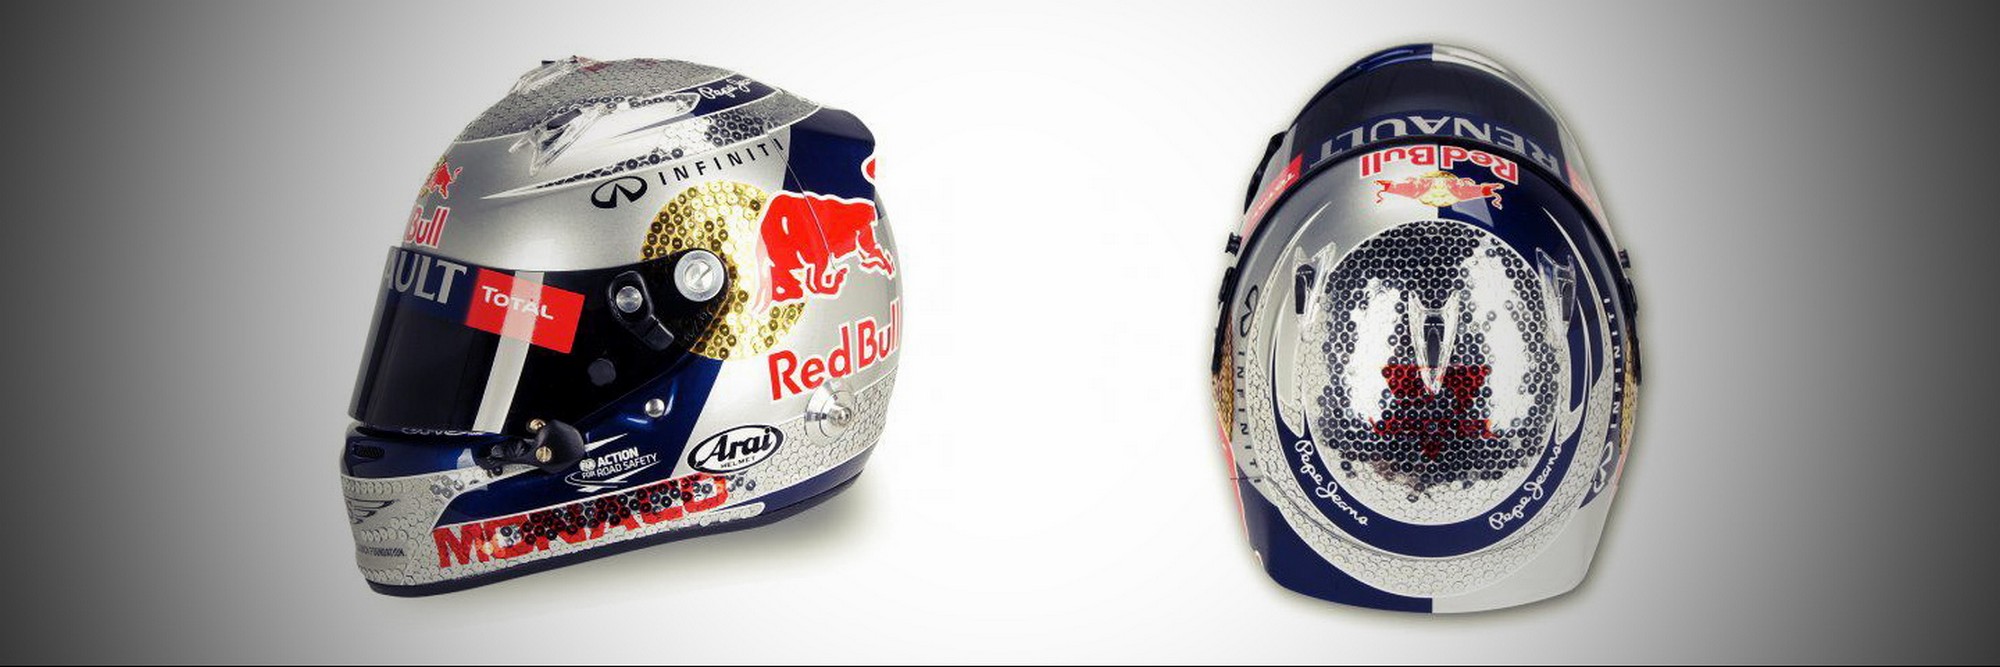 Шлем Себастьяна Феттеля на Гран-При Монако 2012 | 2012 Monaco Grand Prix helmet of Sebastian Vettel